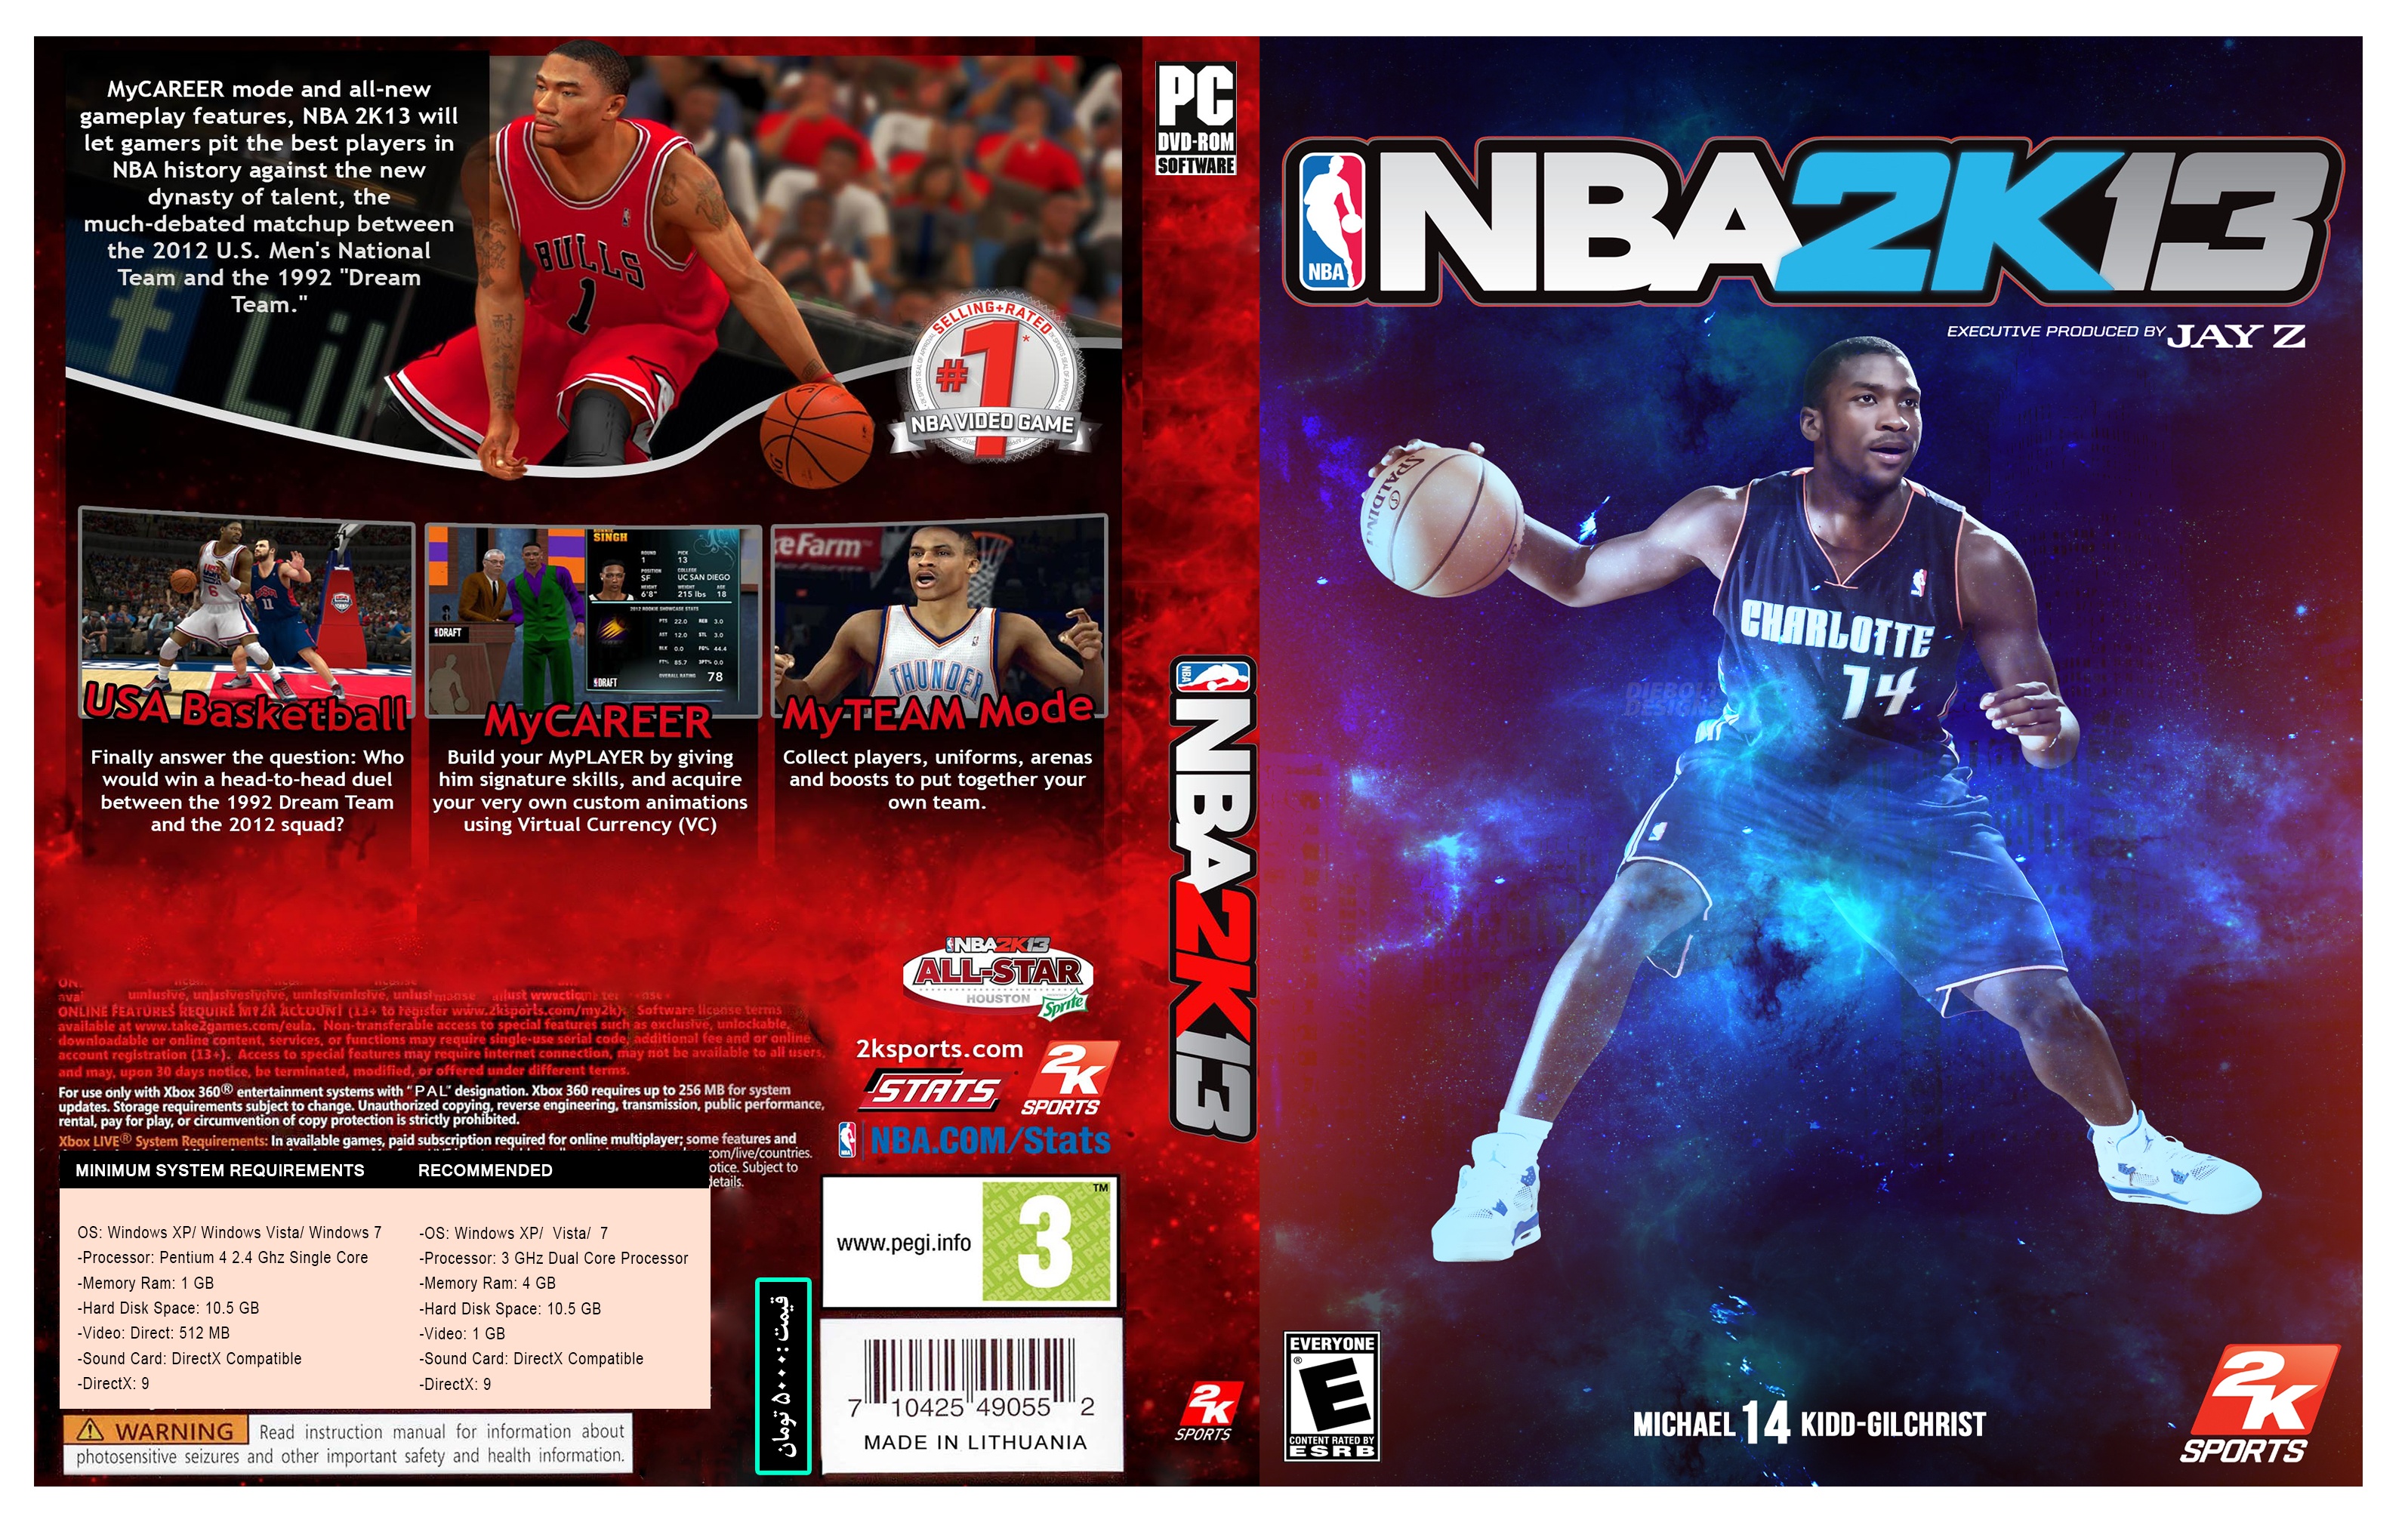 NBA 2K13 box cover